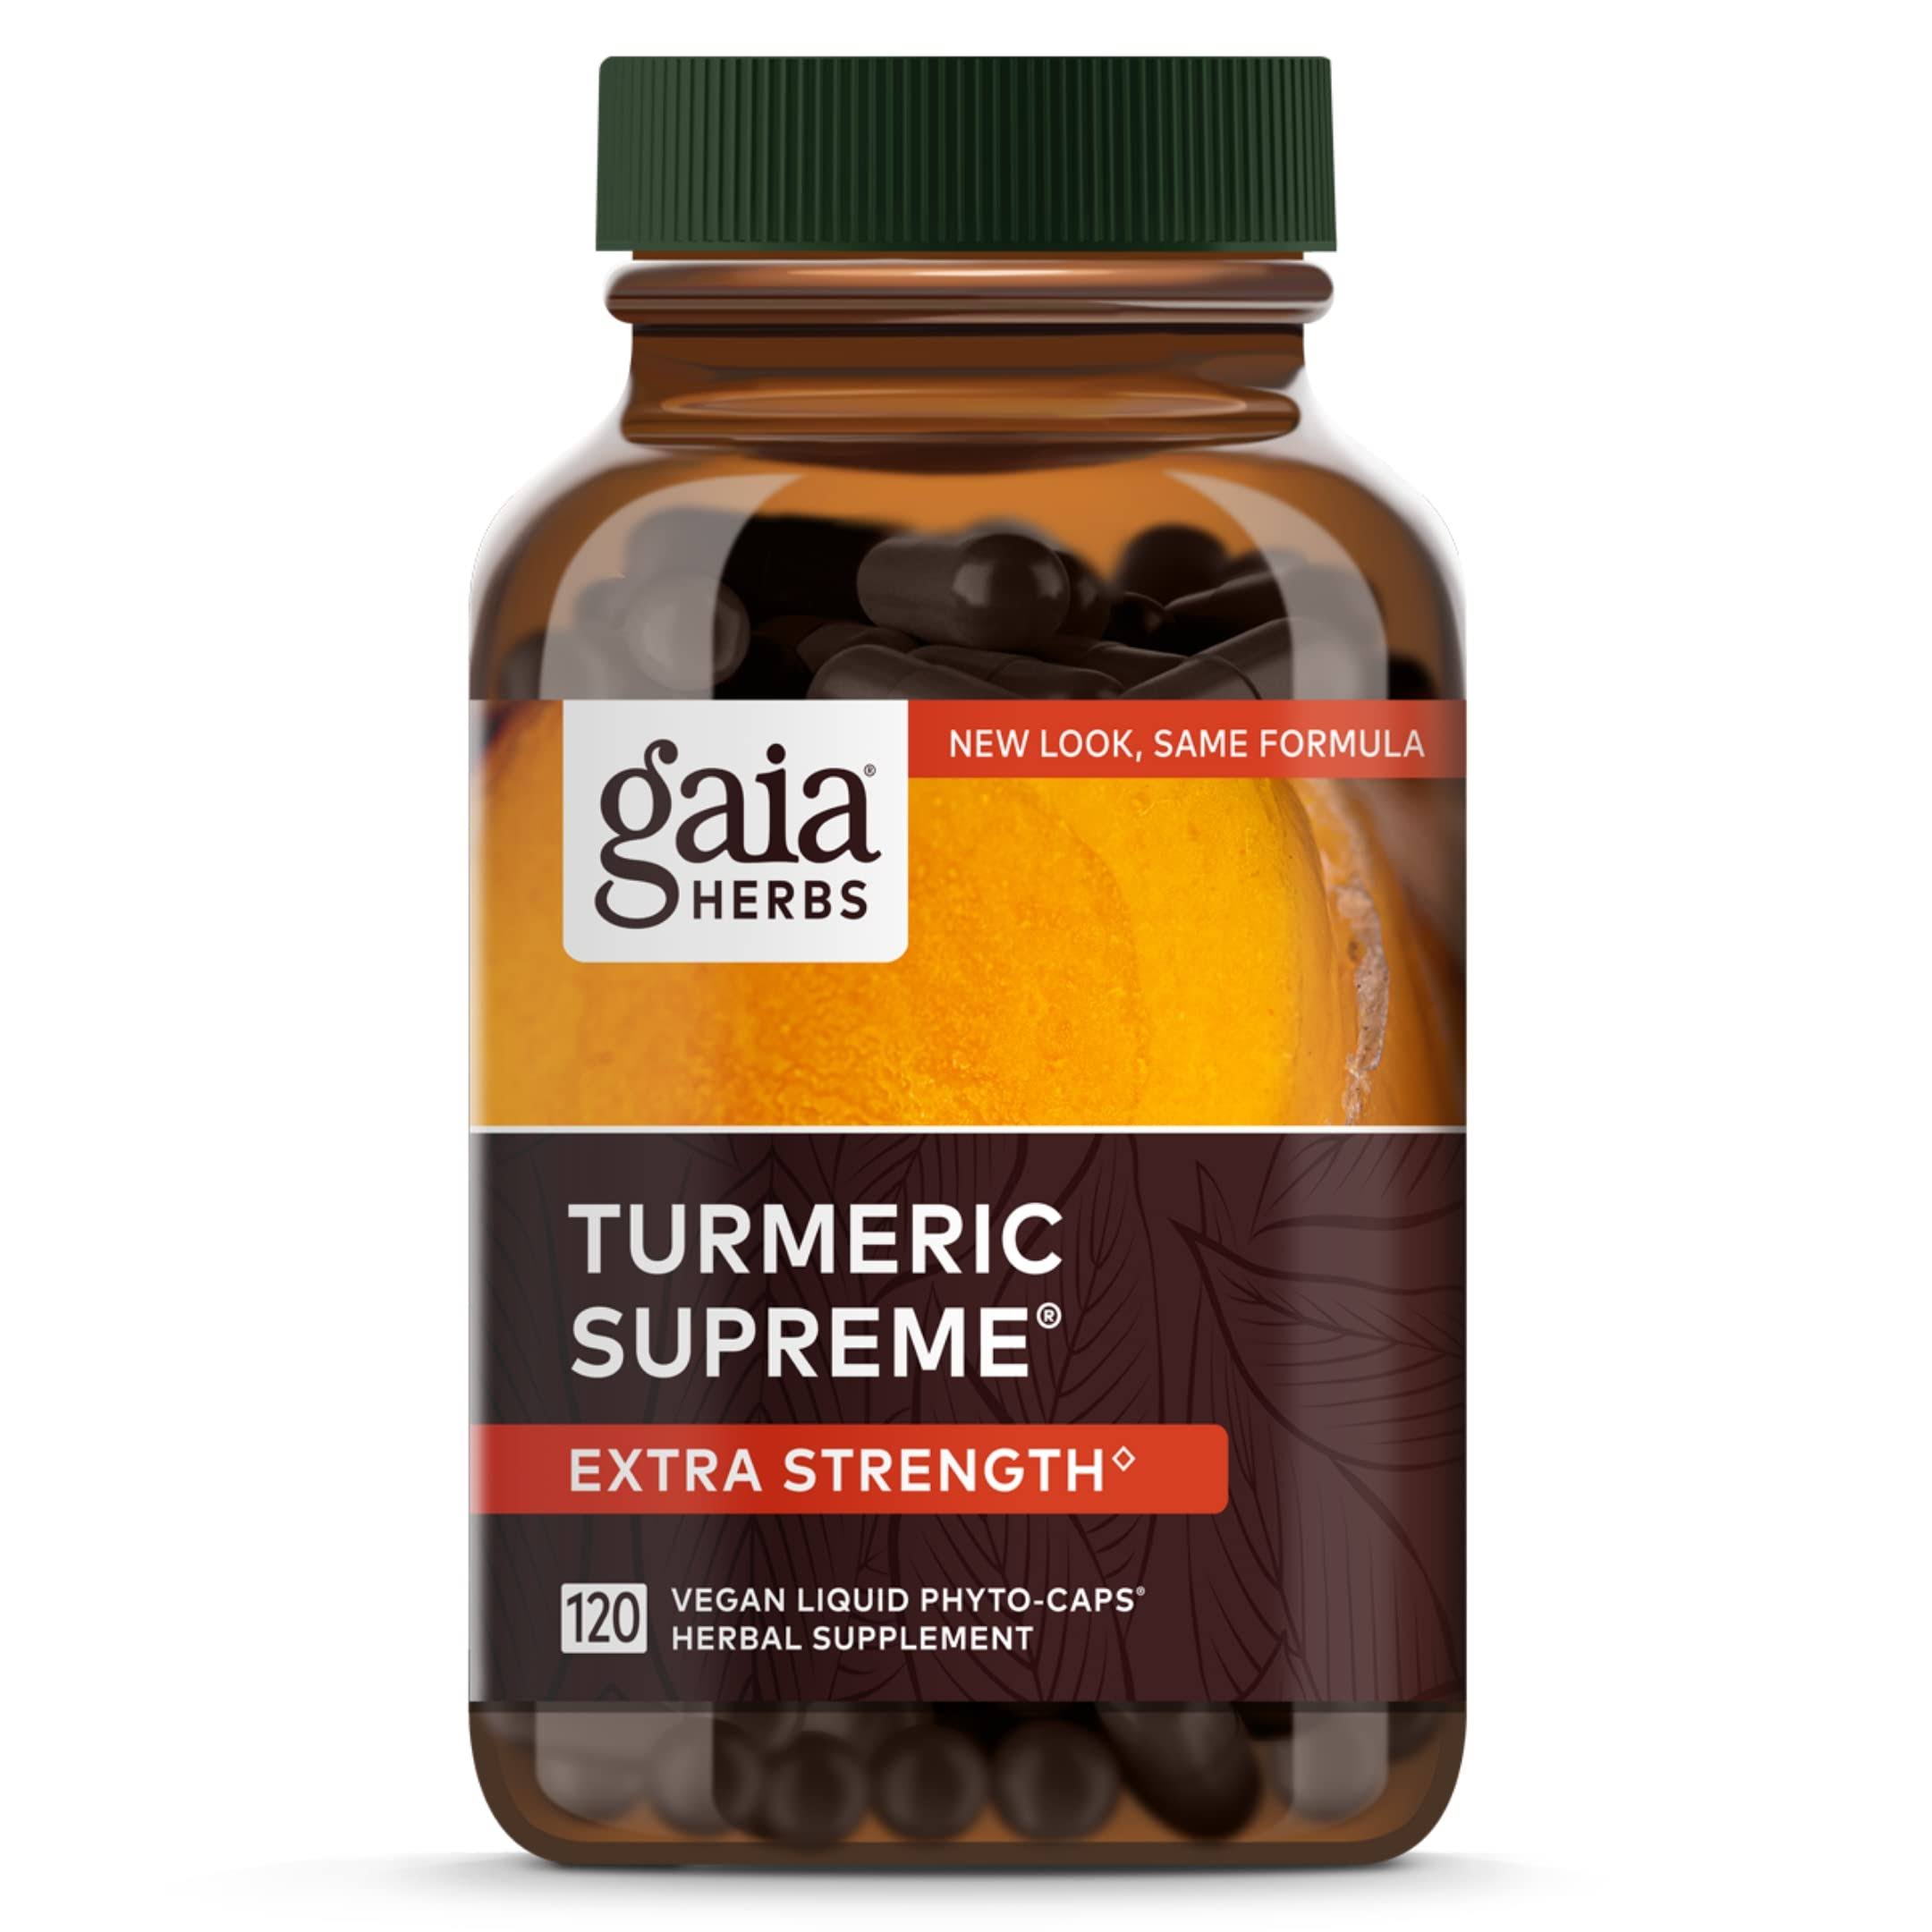 Gaia Herbs Turmeric Supreme Extra Strength Dietary Supplement - 120 Capsules